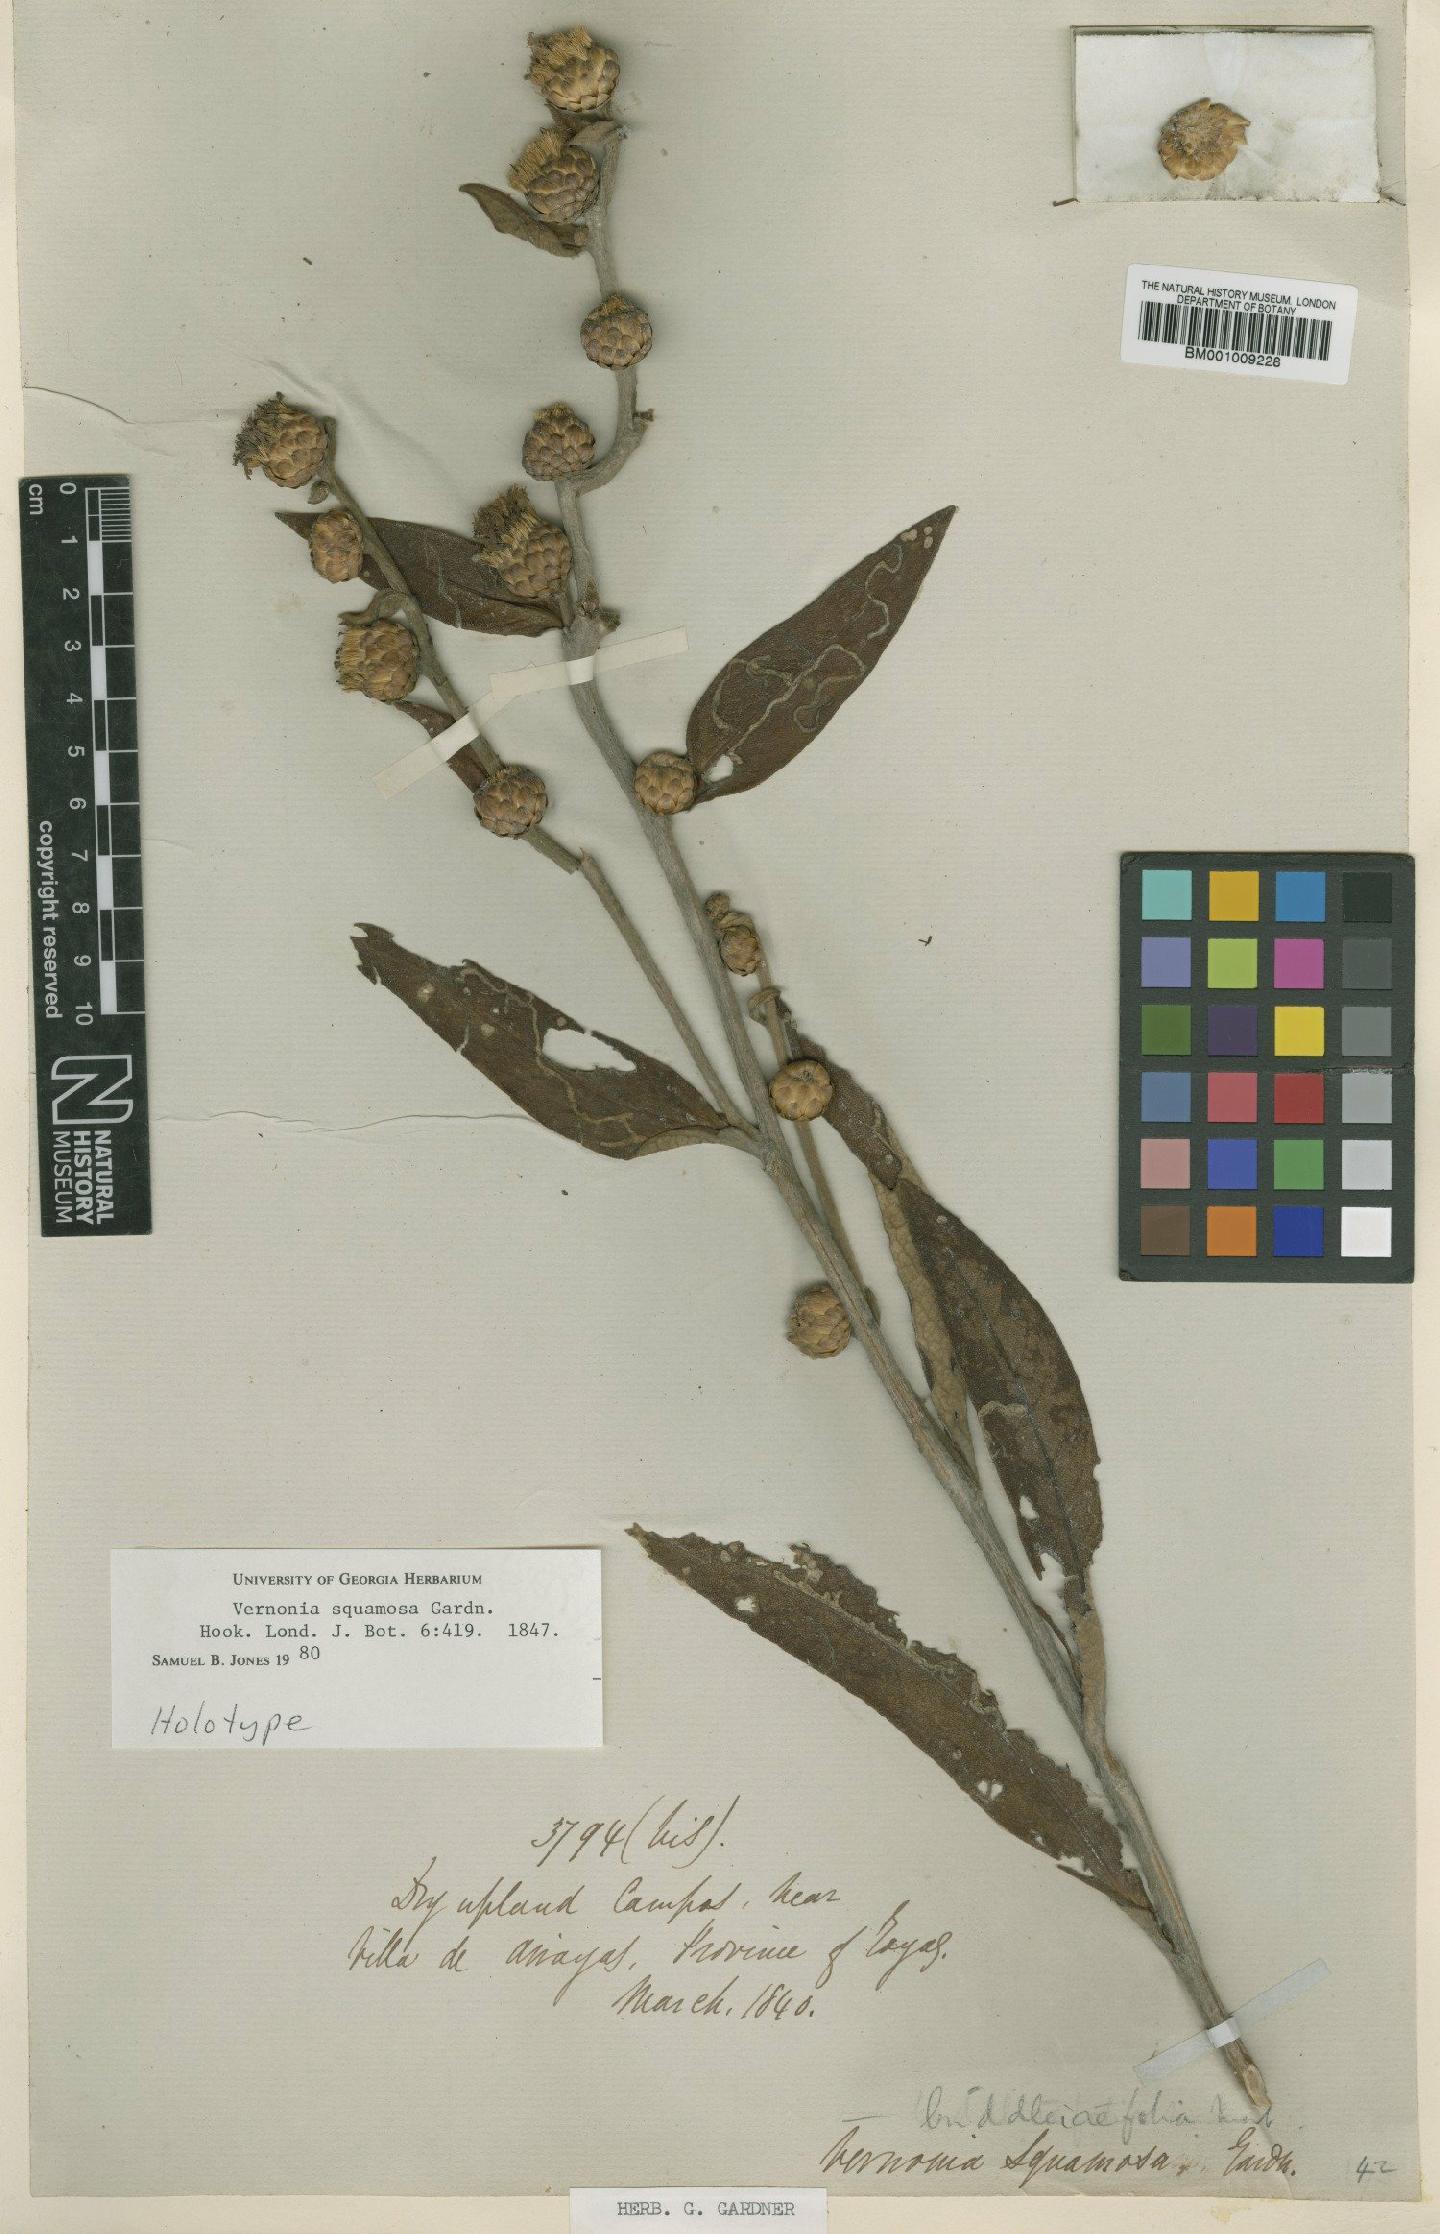 To NHMUK collection (Vernonia squamosa Gardner; Holotype; NHMUK:ecatalogue:557832)